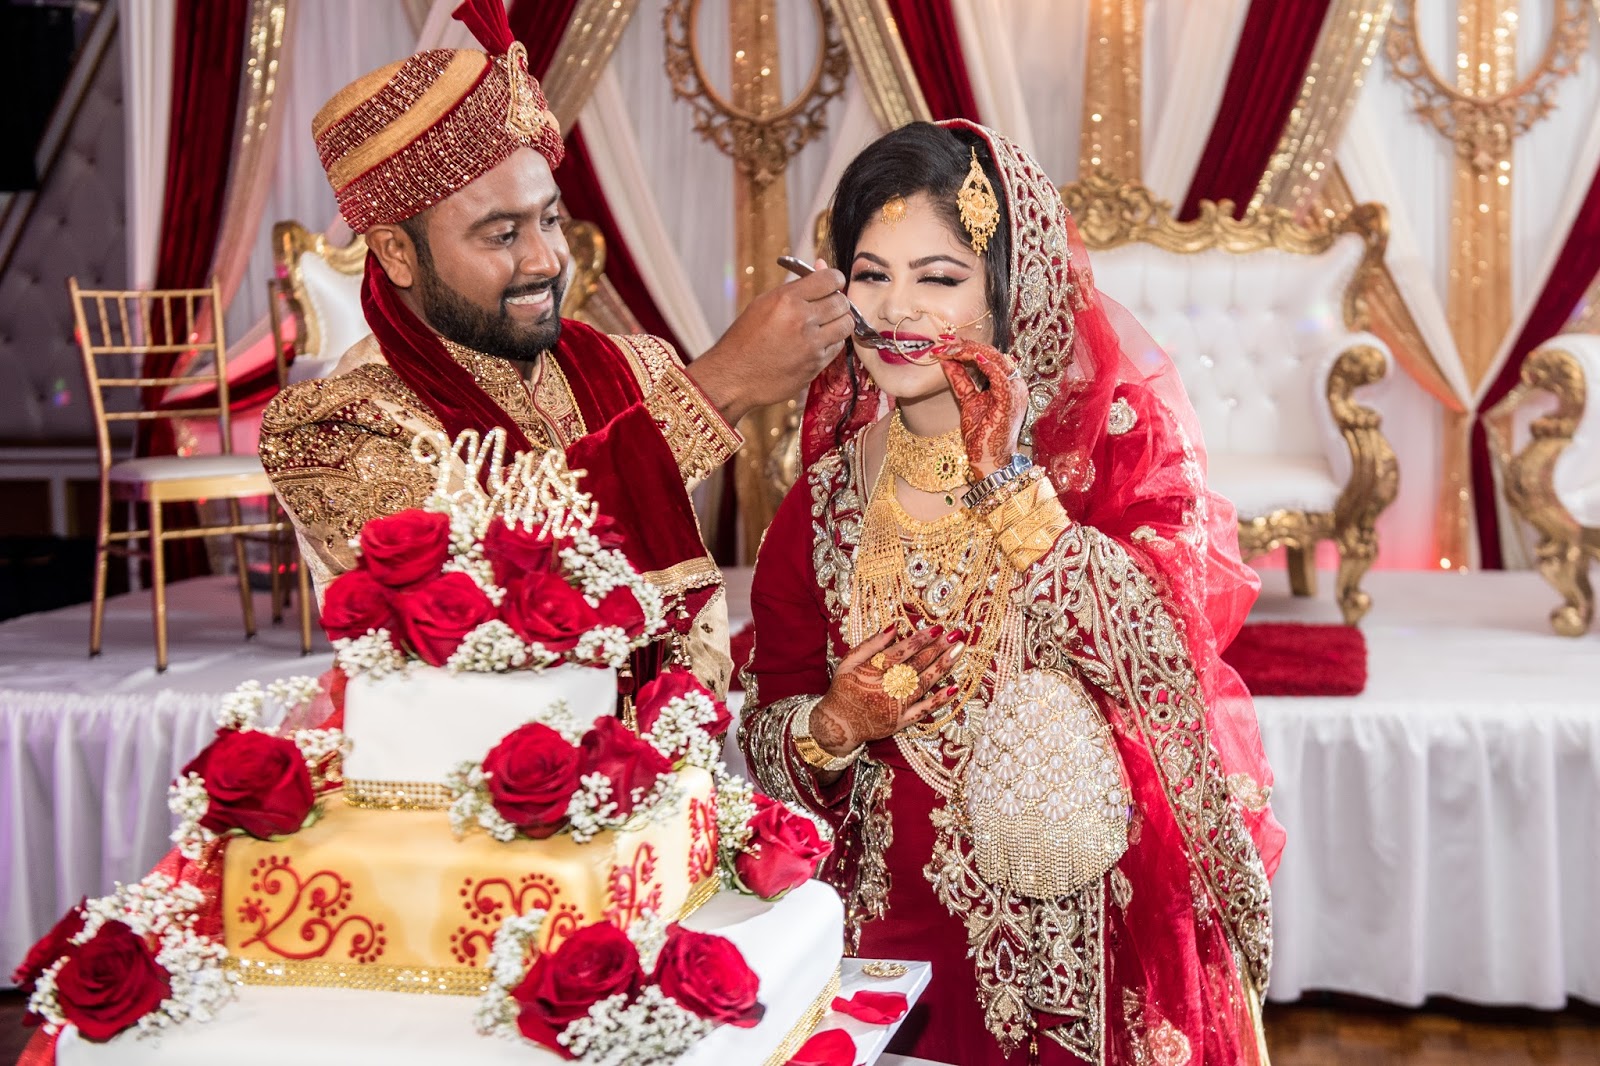 professional Indian wedding photographie